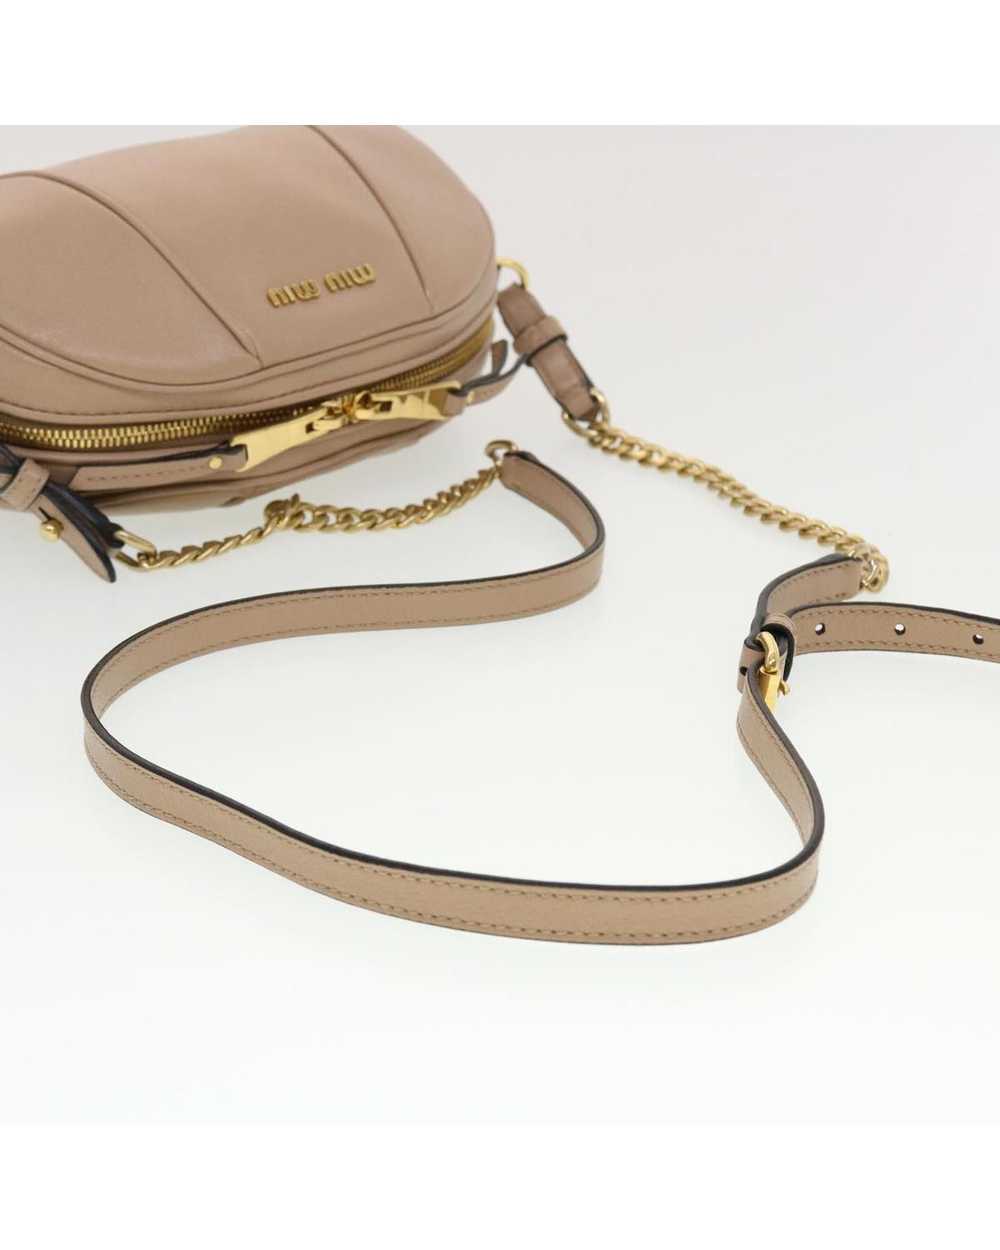 Miu Miu Chain Shoulder Bag Leather Beige Pink - image 7